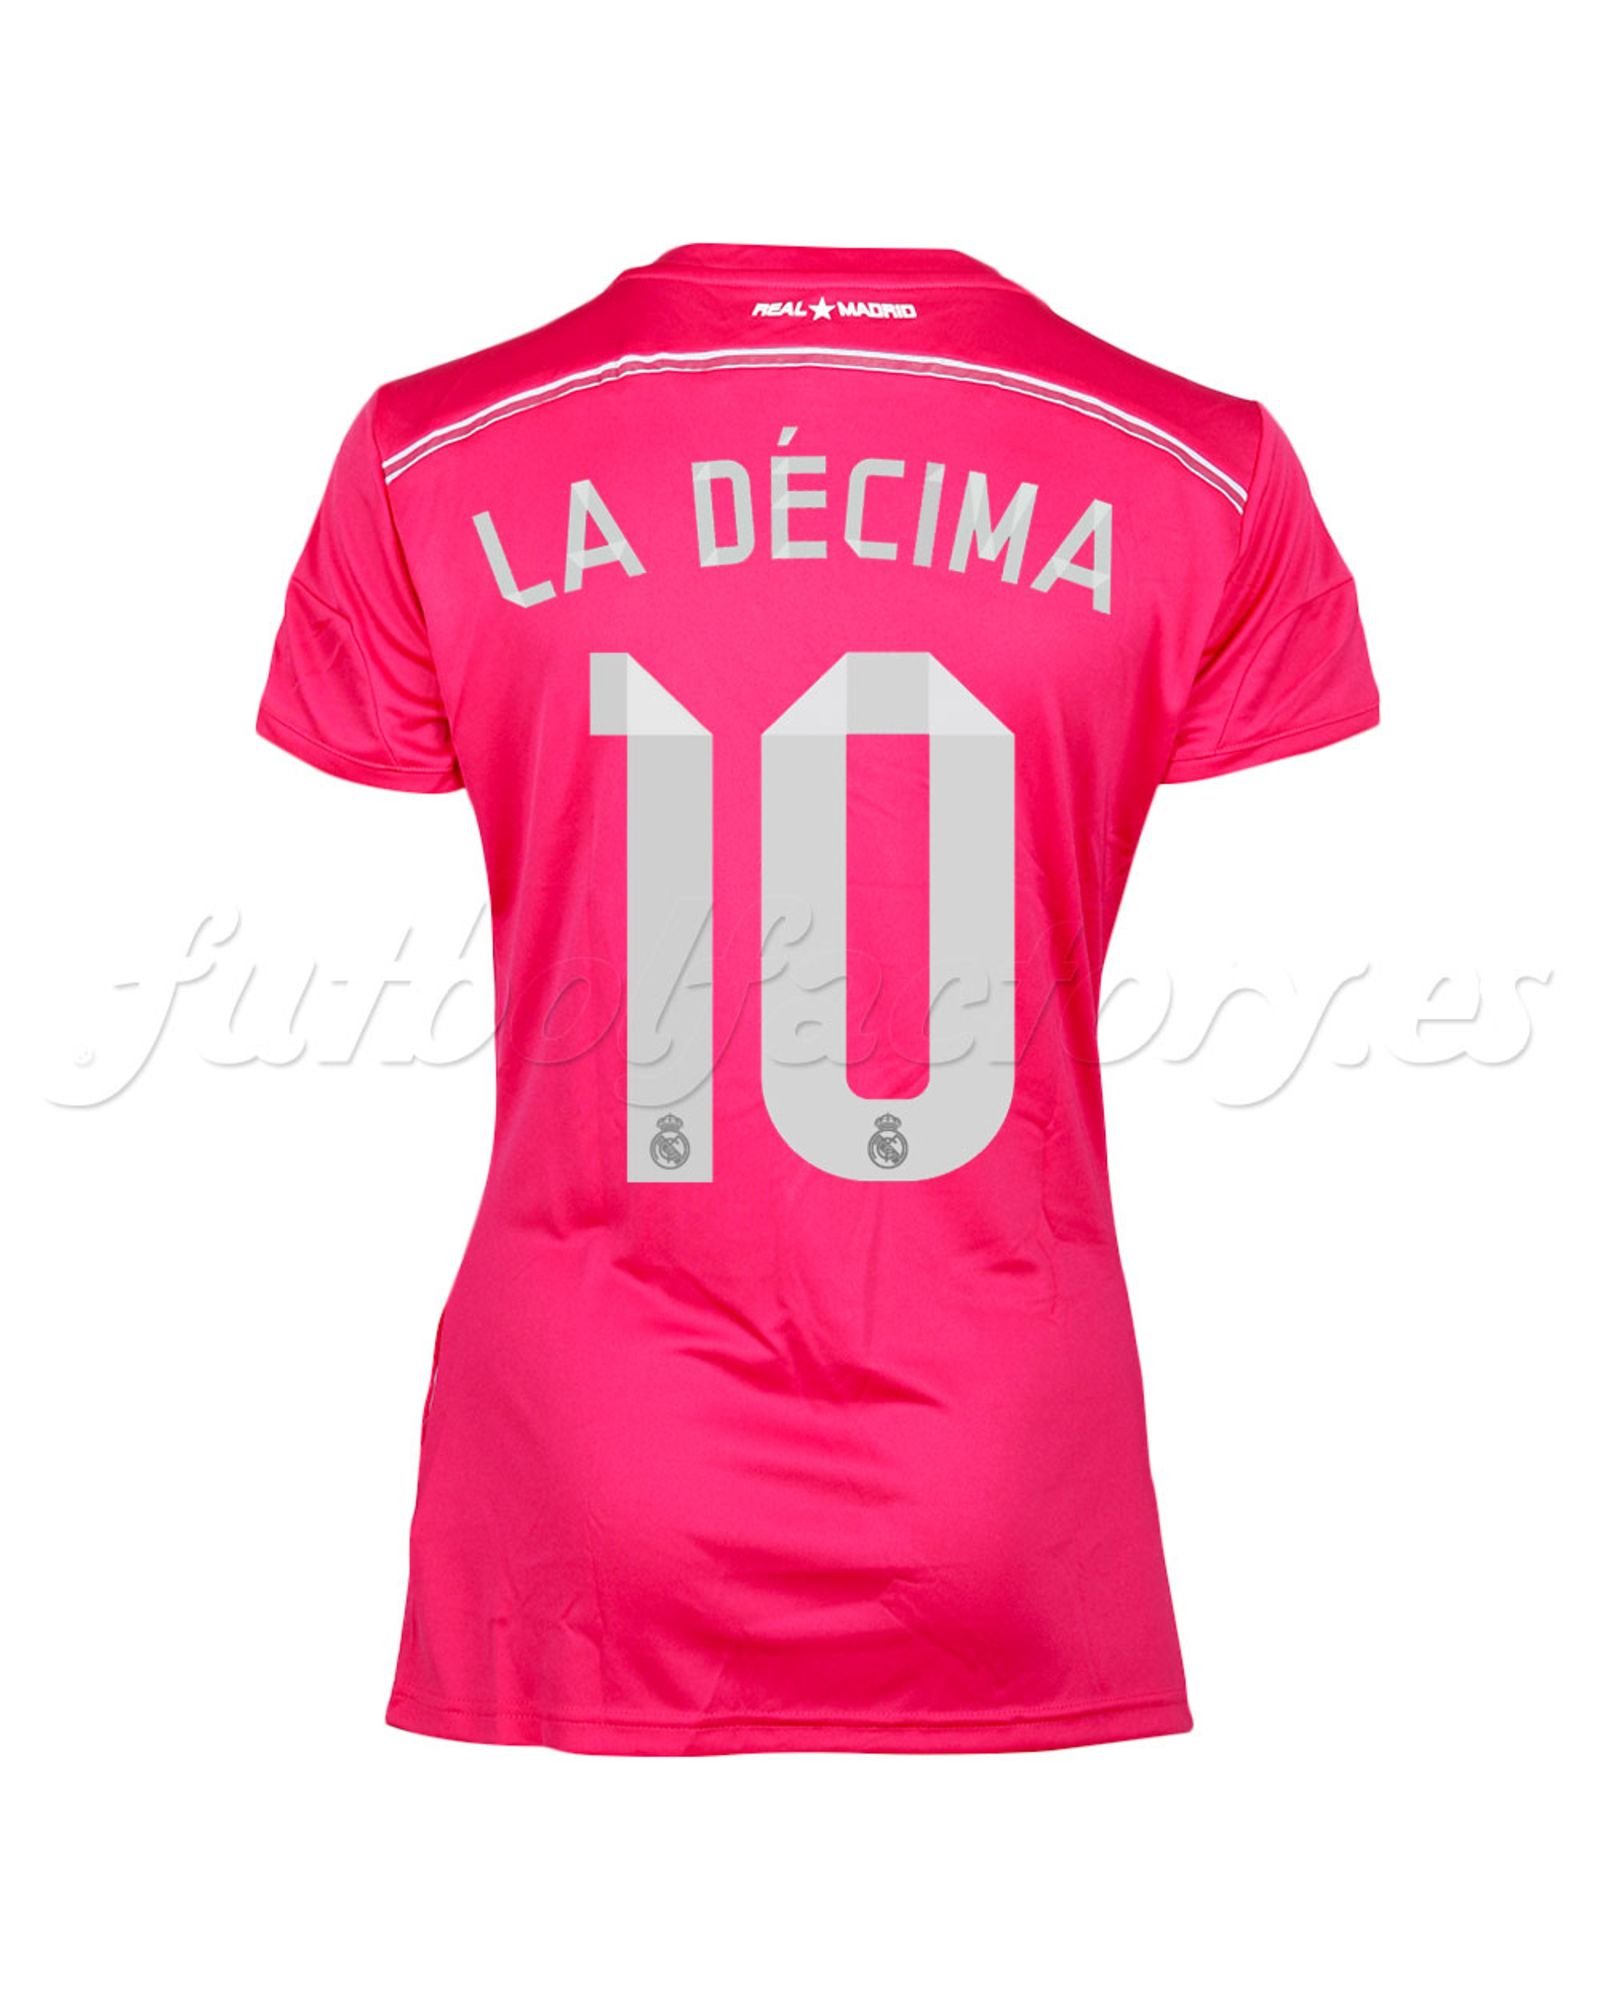 Camiseta Real Madrid 2ª LA DECIMA  Mujer 2014/2015  Rosa - Fútbol Factory